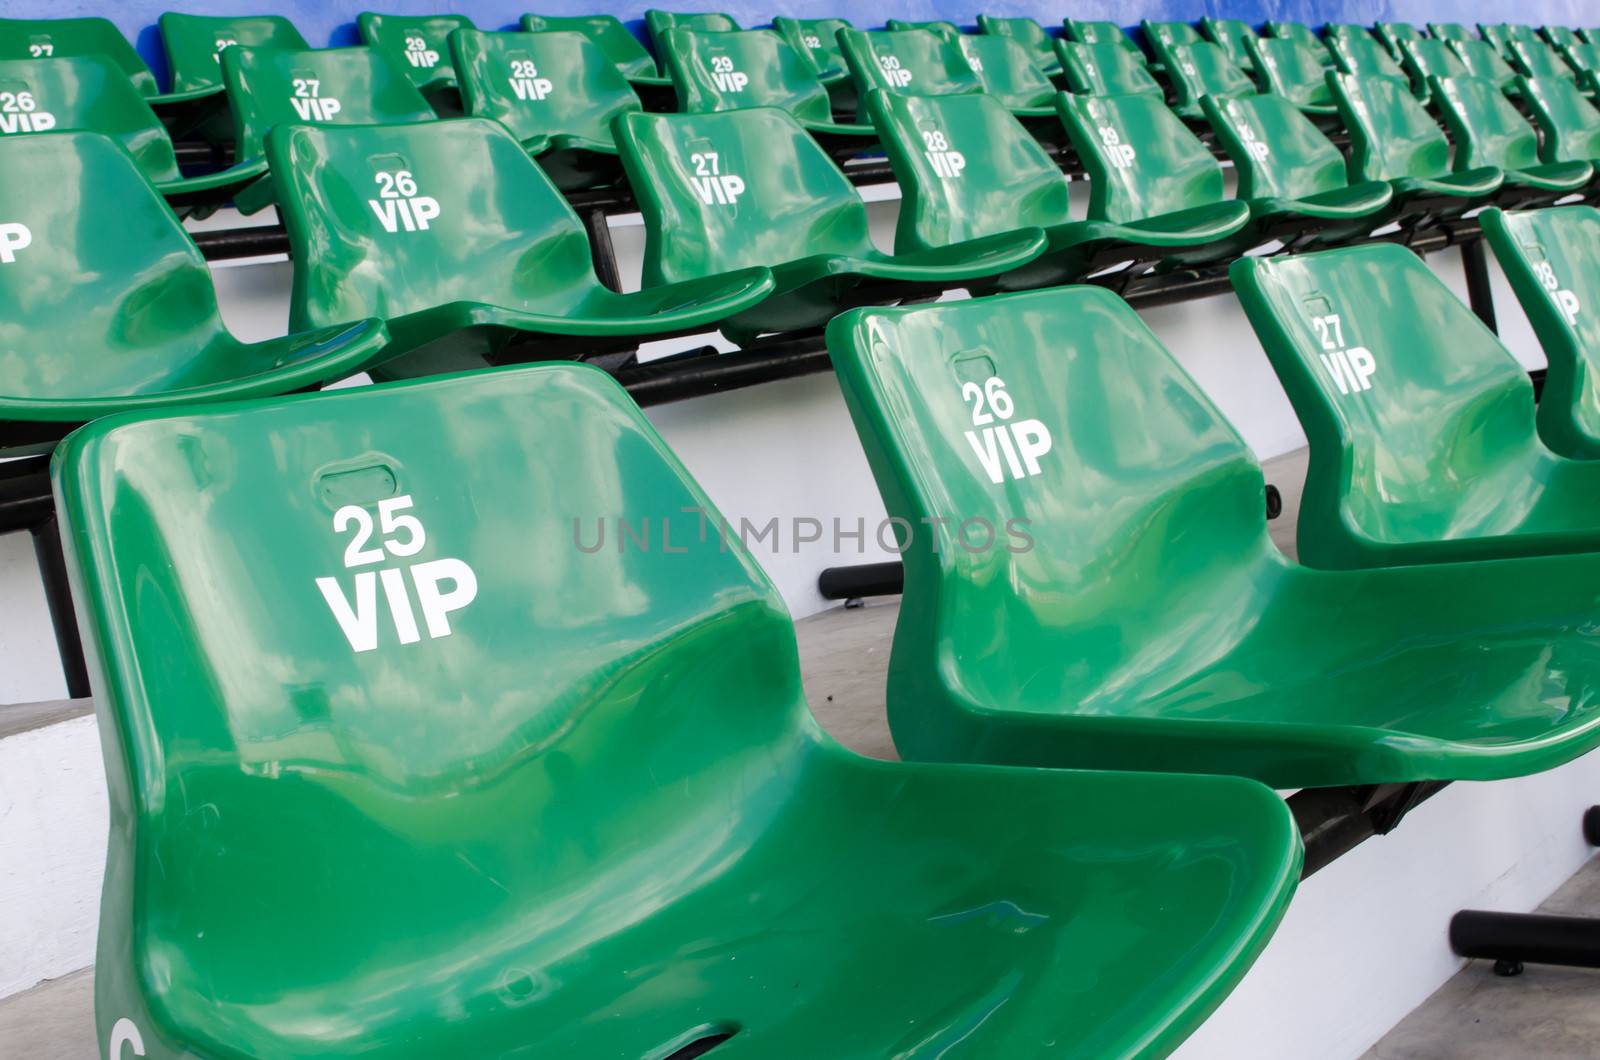 Stadium seats  by hinnamsaisuy